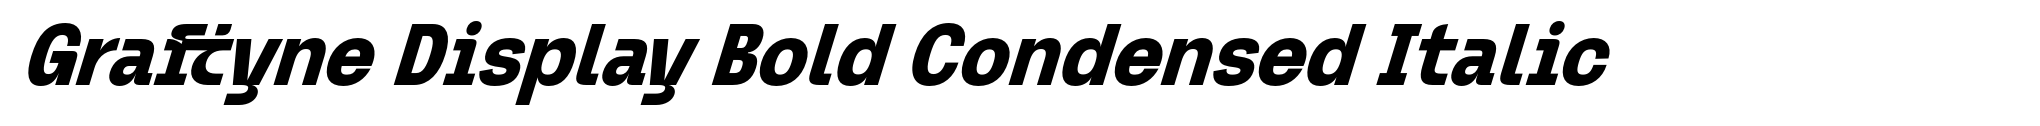 Graftyne Display Bold Condensed Italic image